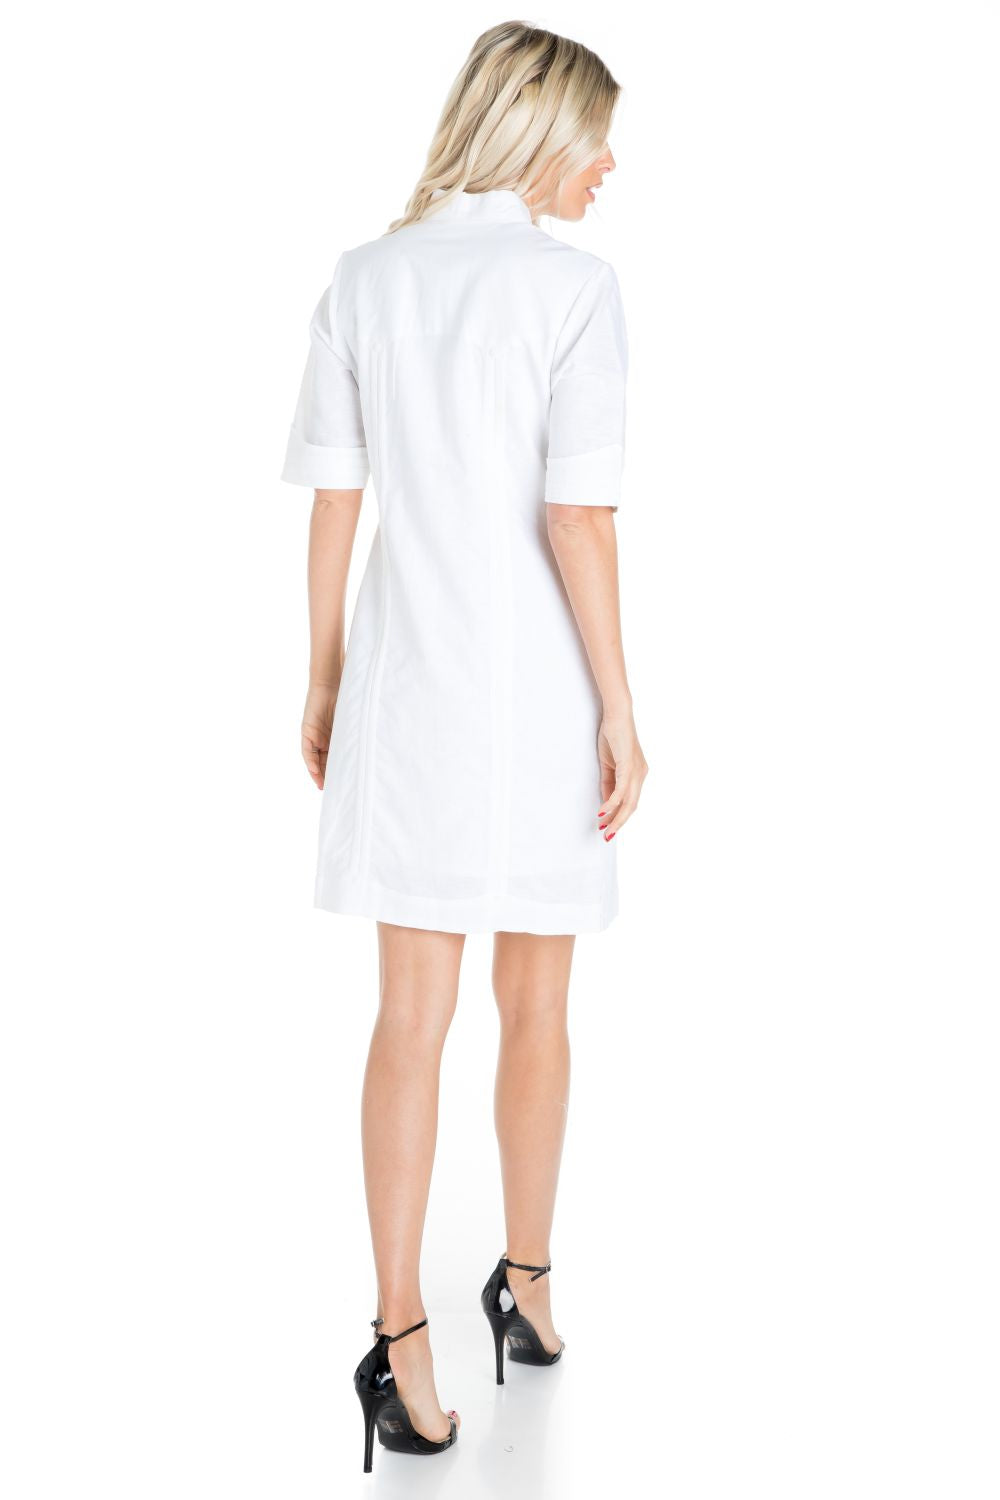 Buy Pink Fort White Shirt Dress for Women's Online @ Tata CLiQ